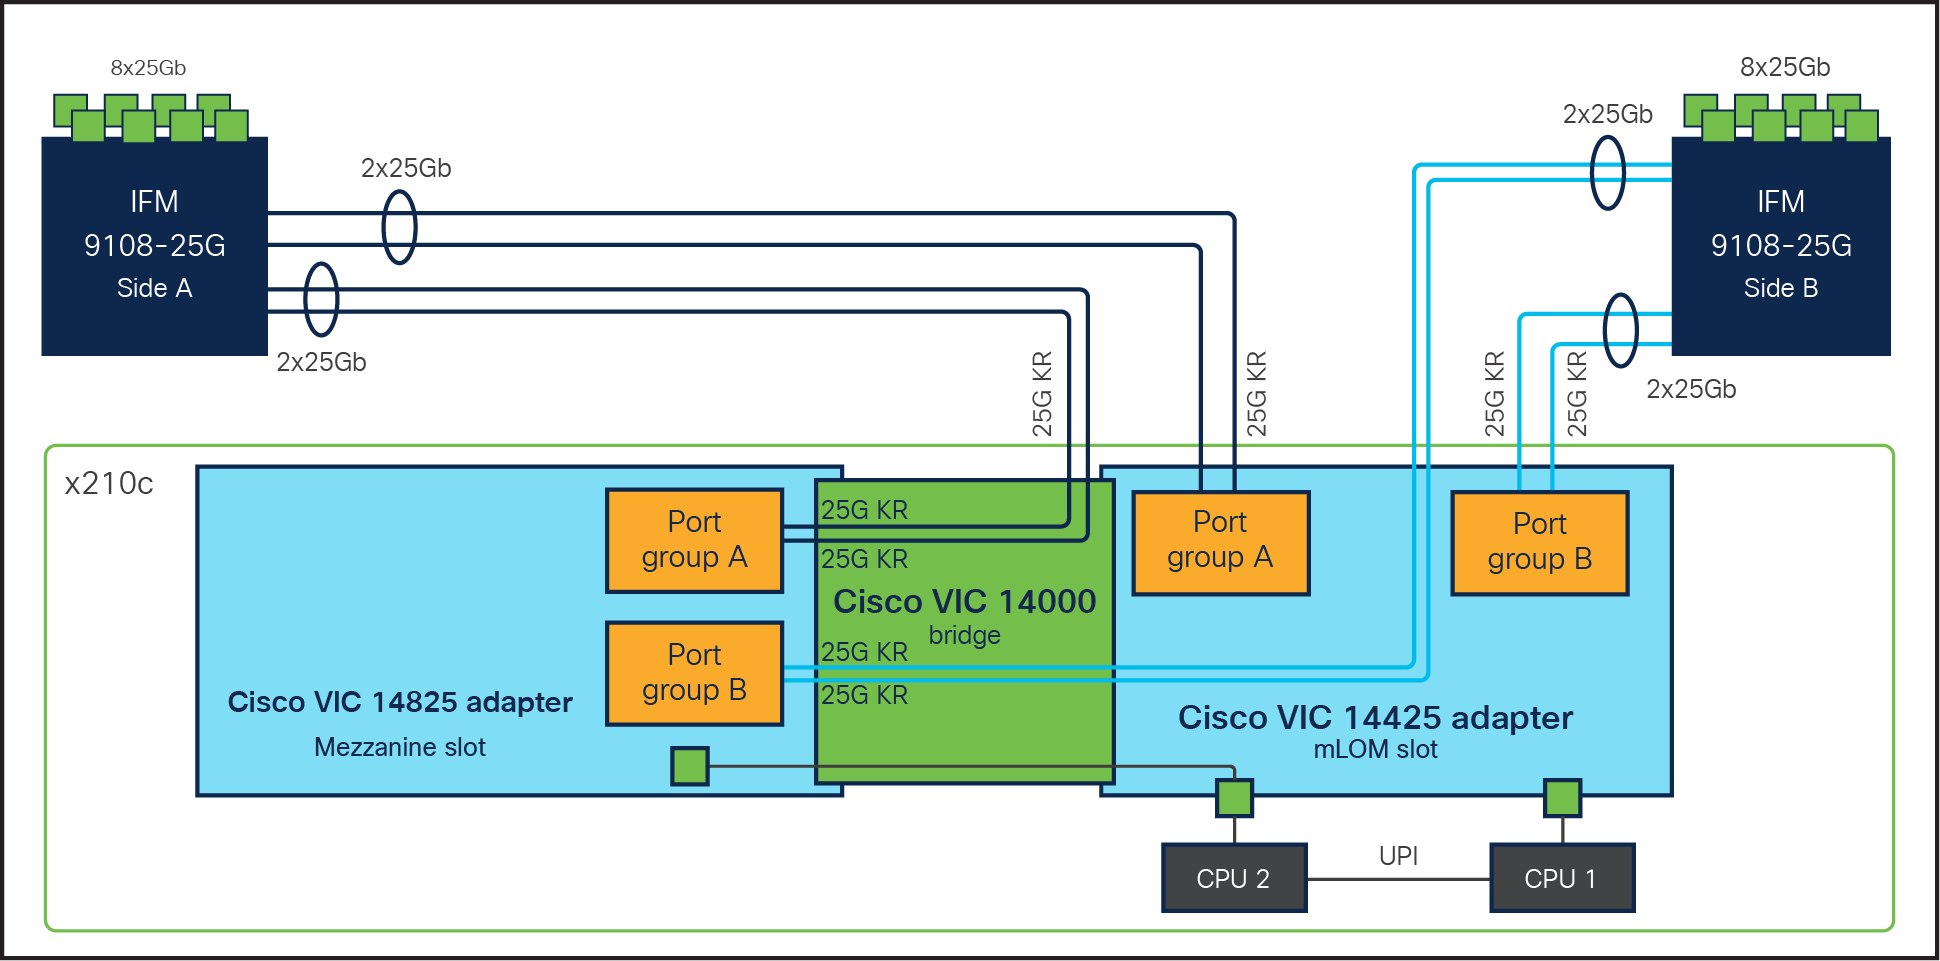 Cisco VIC 14425 and 14825 in Cisco UCS X210c M6 Compute Node